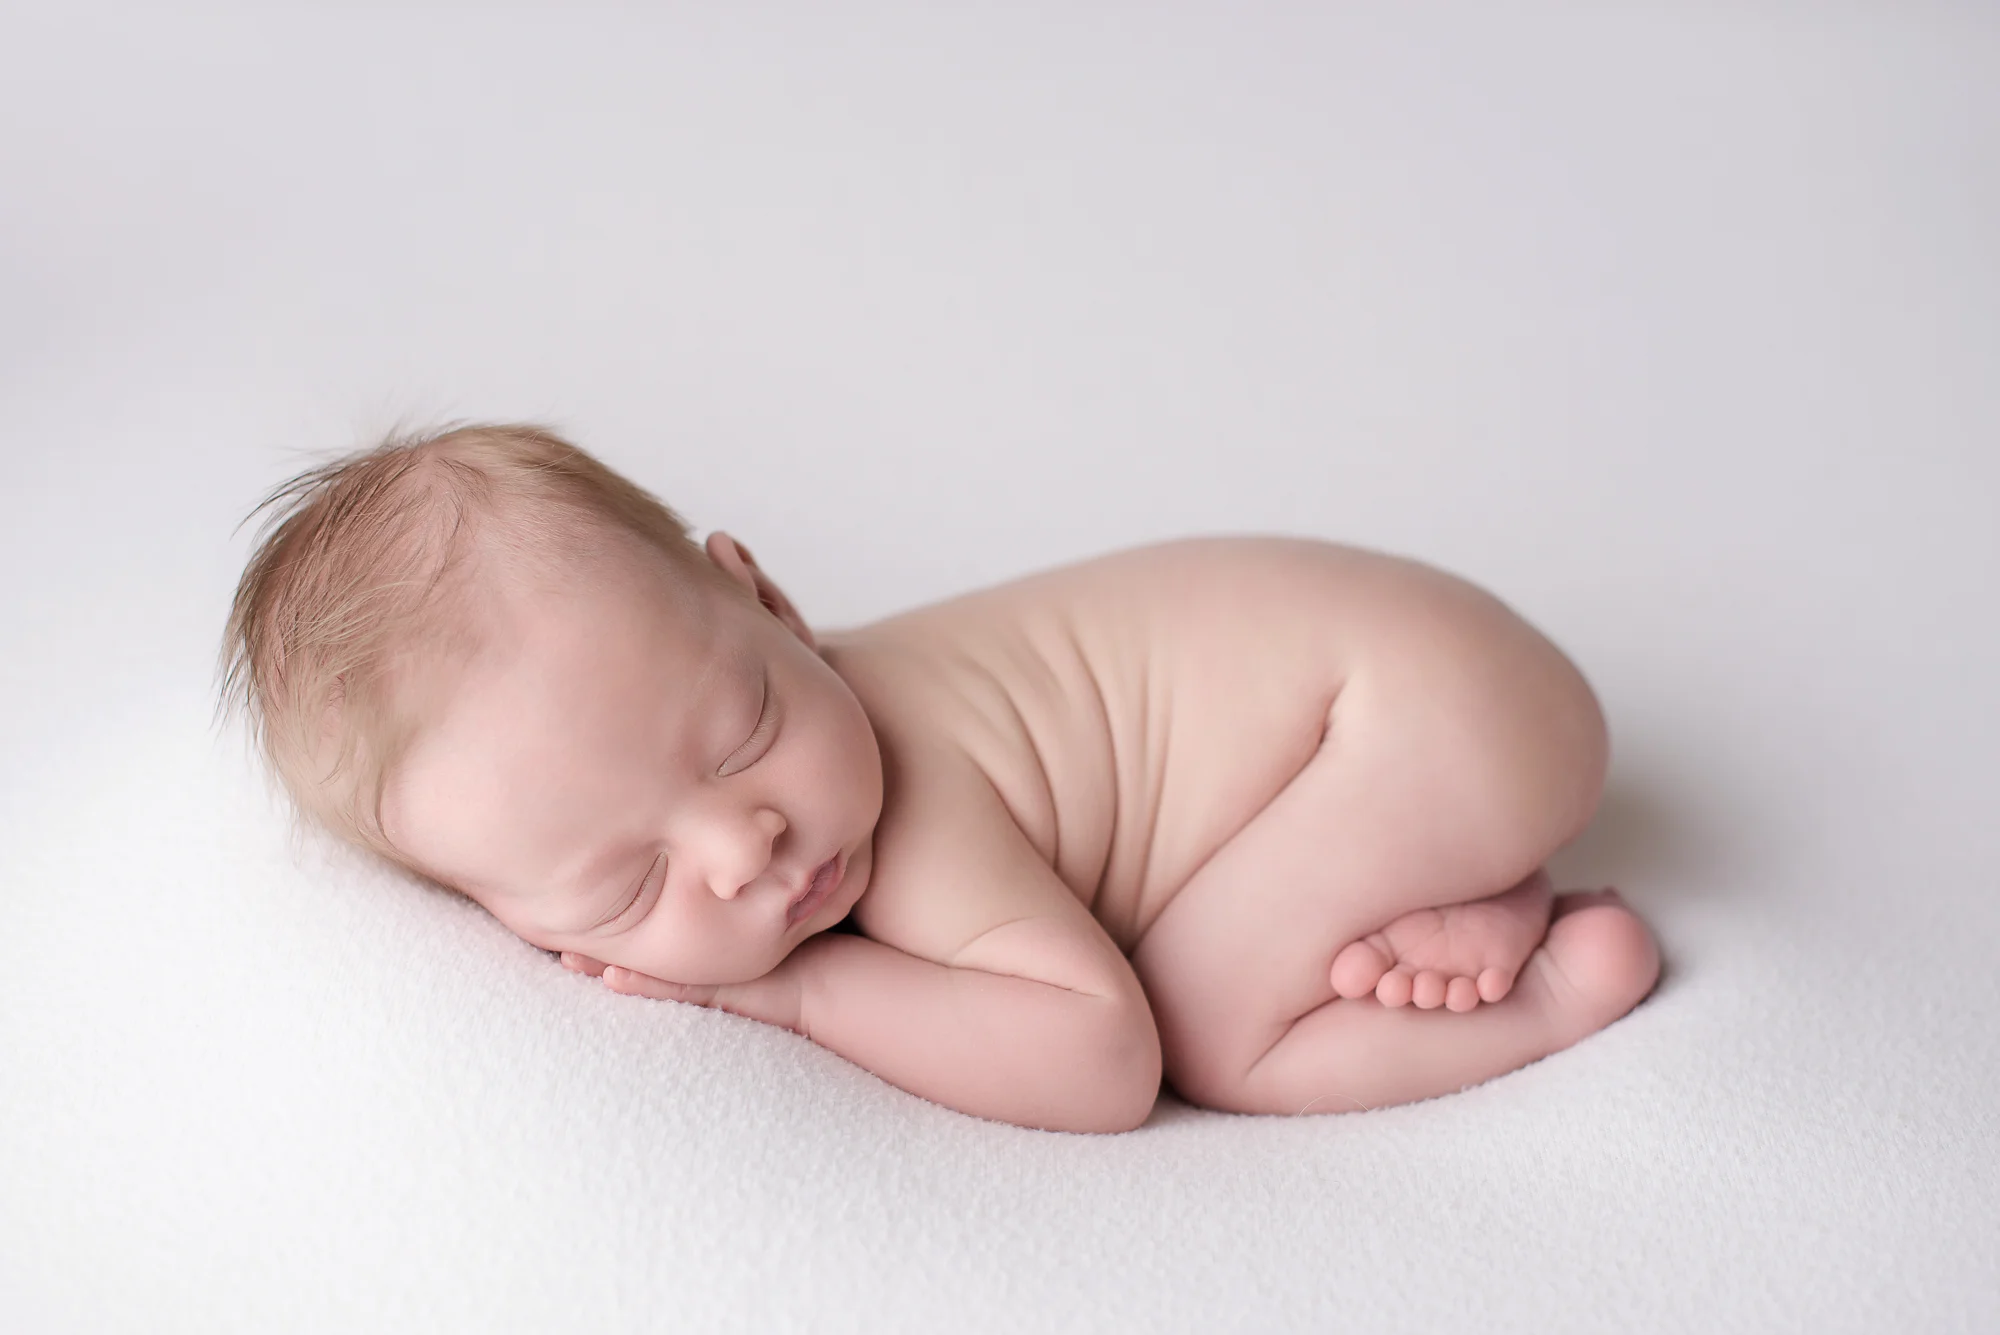 newborn photography naked baby sleeping on white blanket